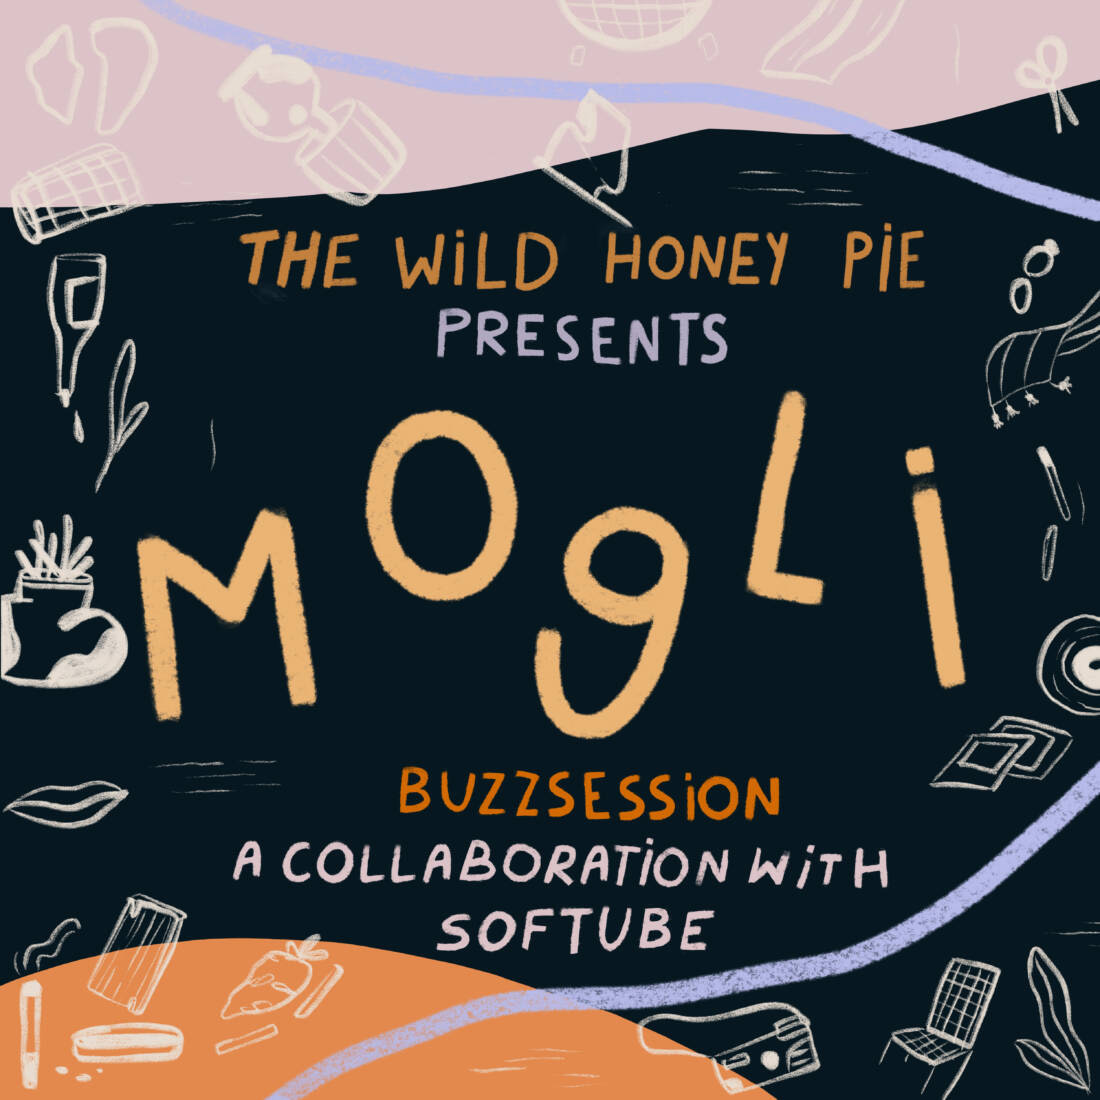 The Wild Honey Pie "Mogli"